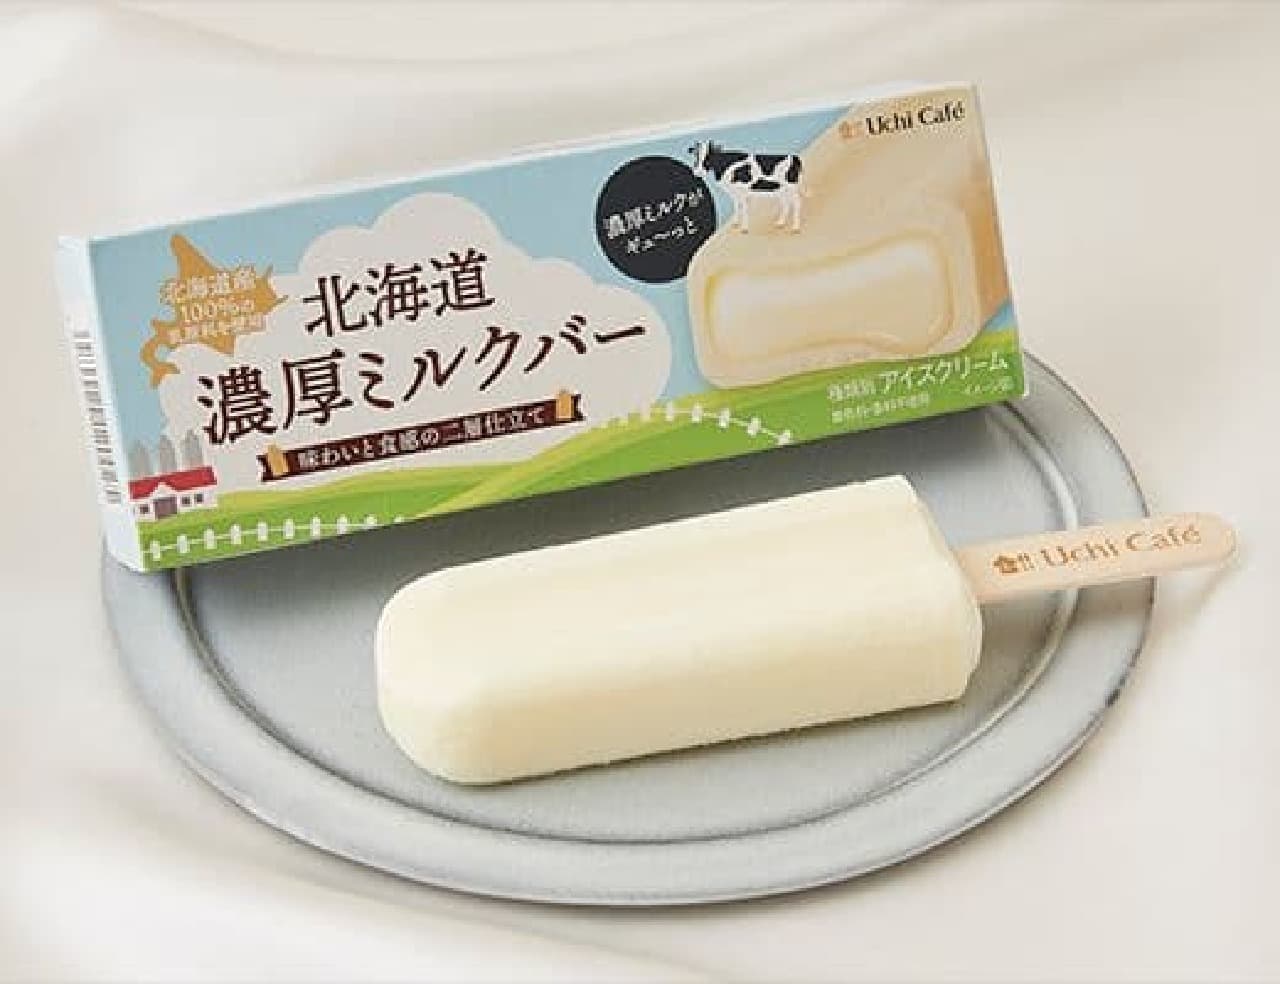 LAWSON "Uchicaffe Hokkaido thick milk bar 80ml